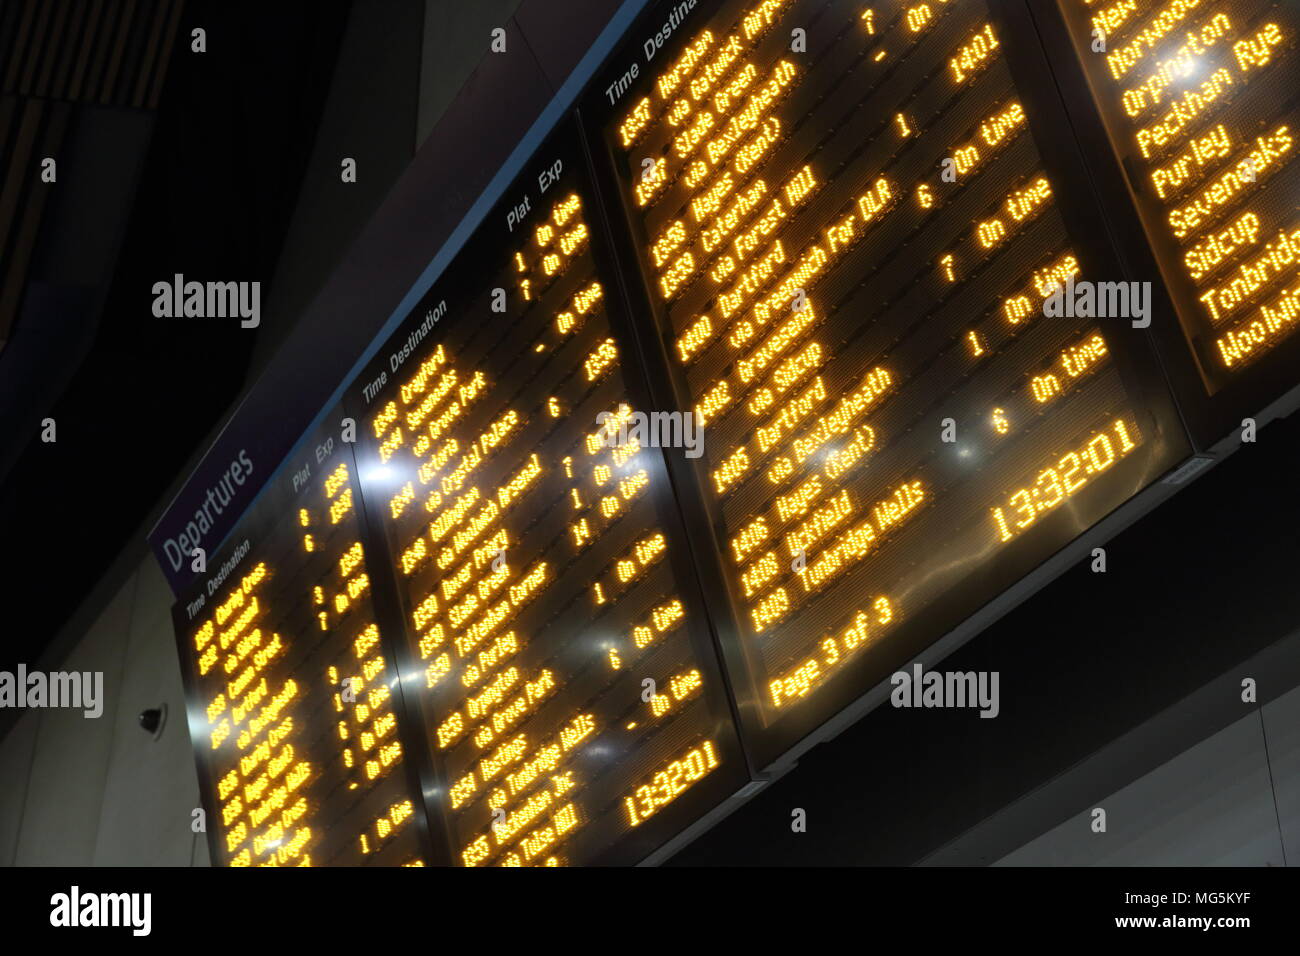 Train departure board at London Bridge station, in London, UK Stock Photo